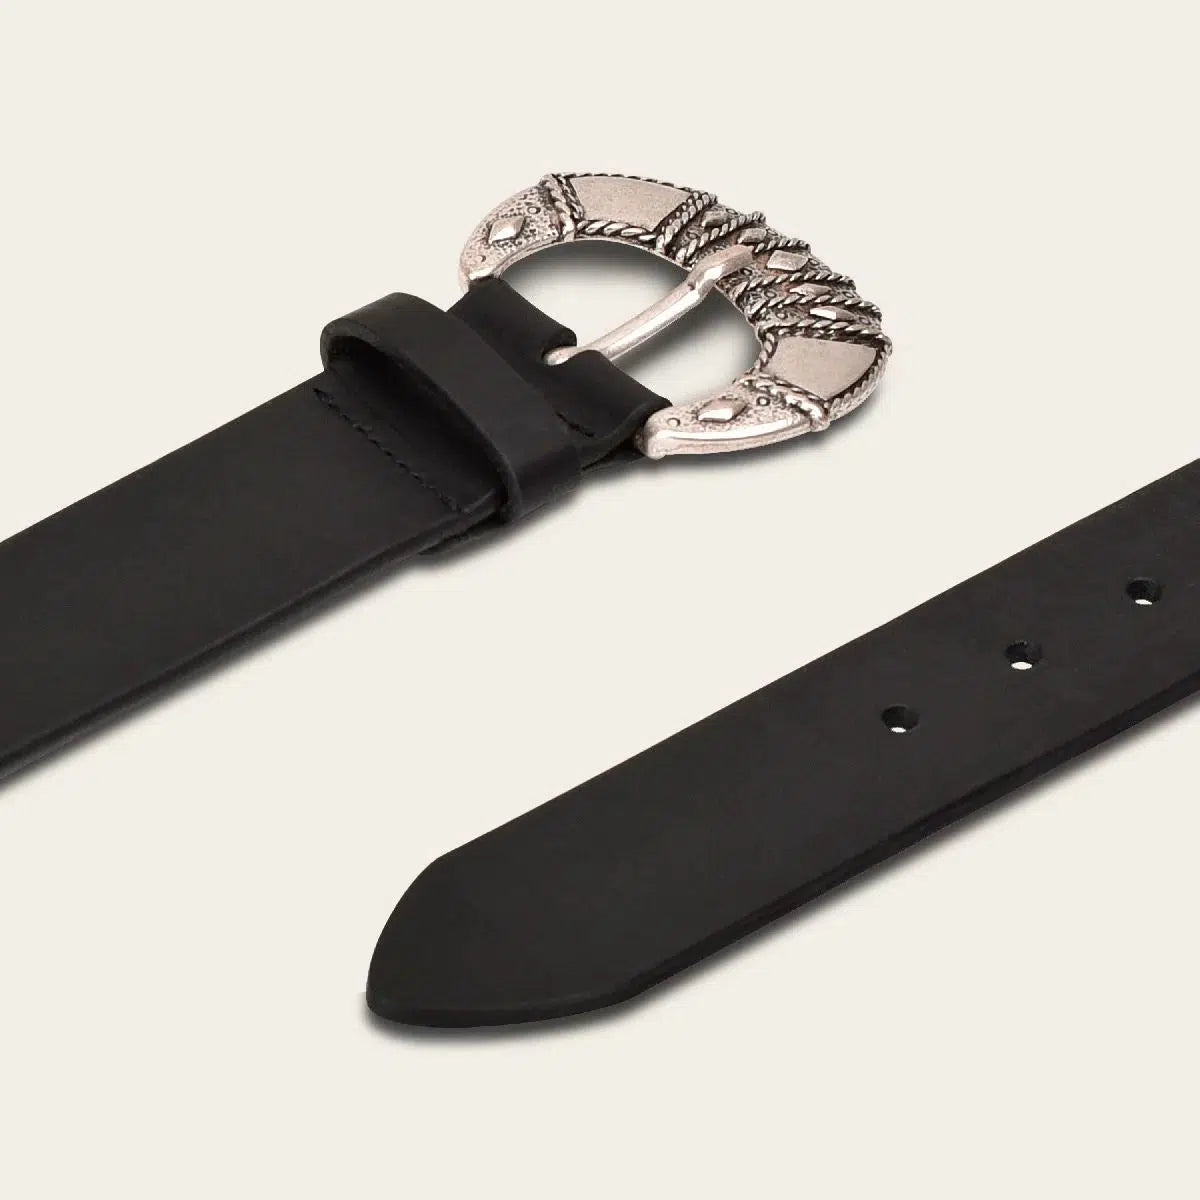 CD9856R - Cuadra black casual western leather belt for women-CUADRA-Kuet-Cuadra-Boots